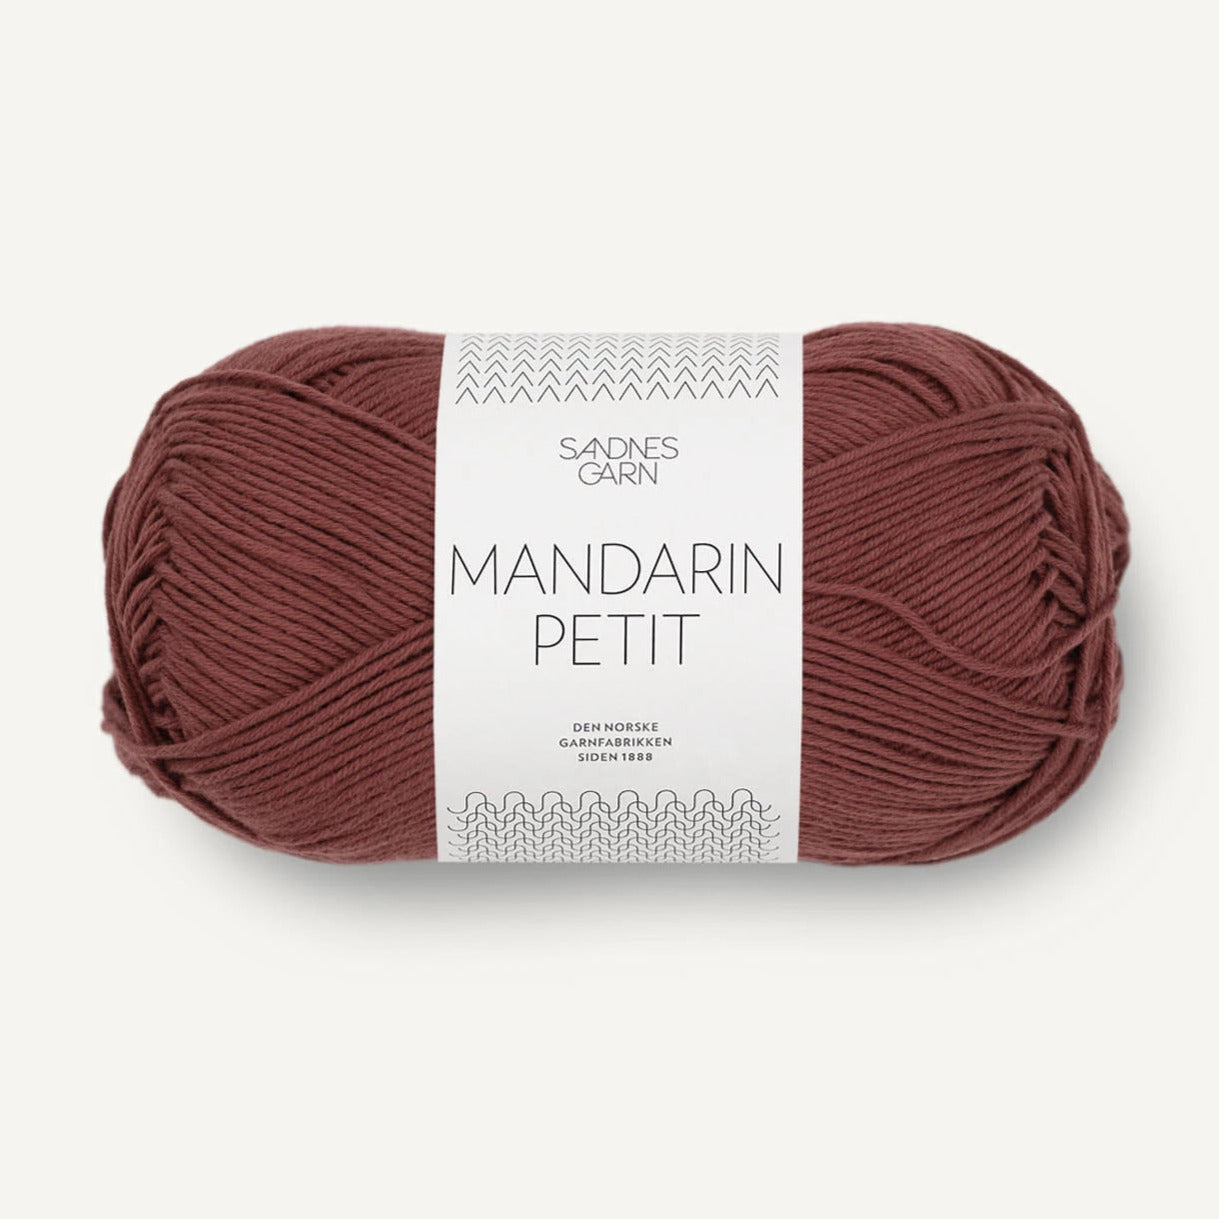 MANDARIN PETIT 4063-Cacao - Sandnes Garn